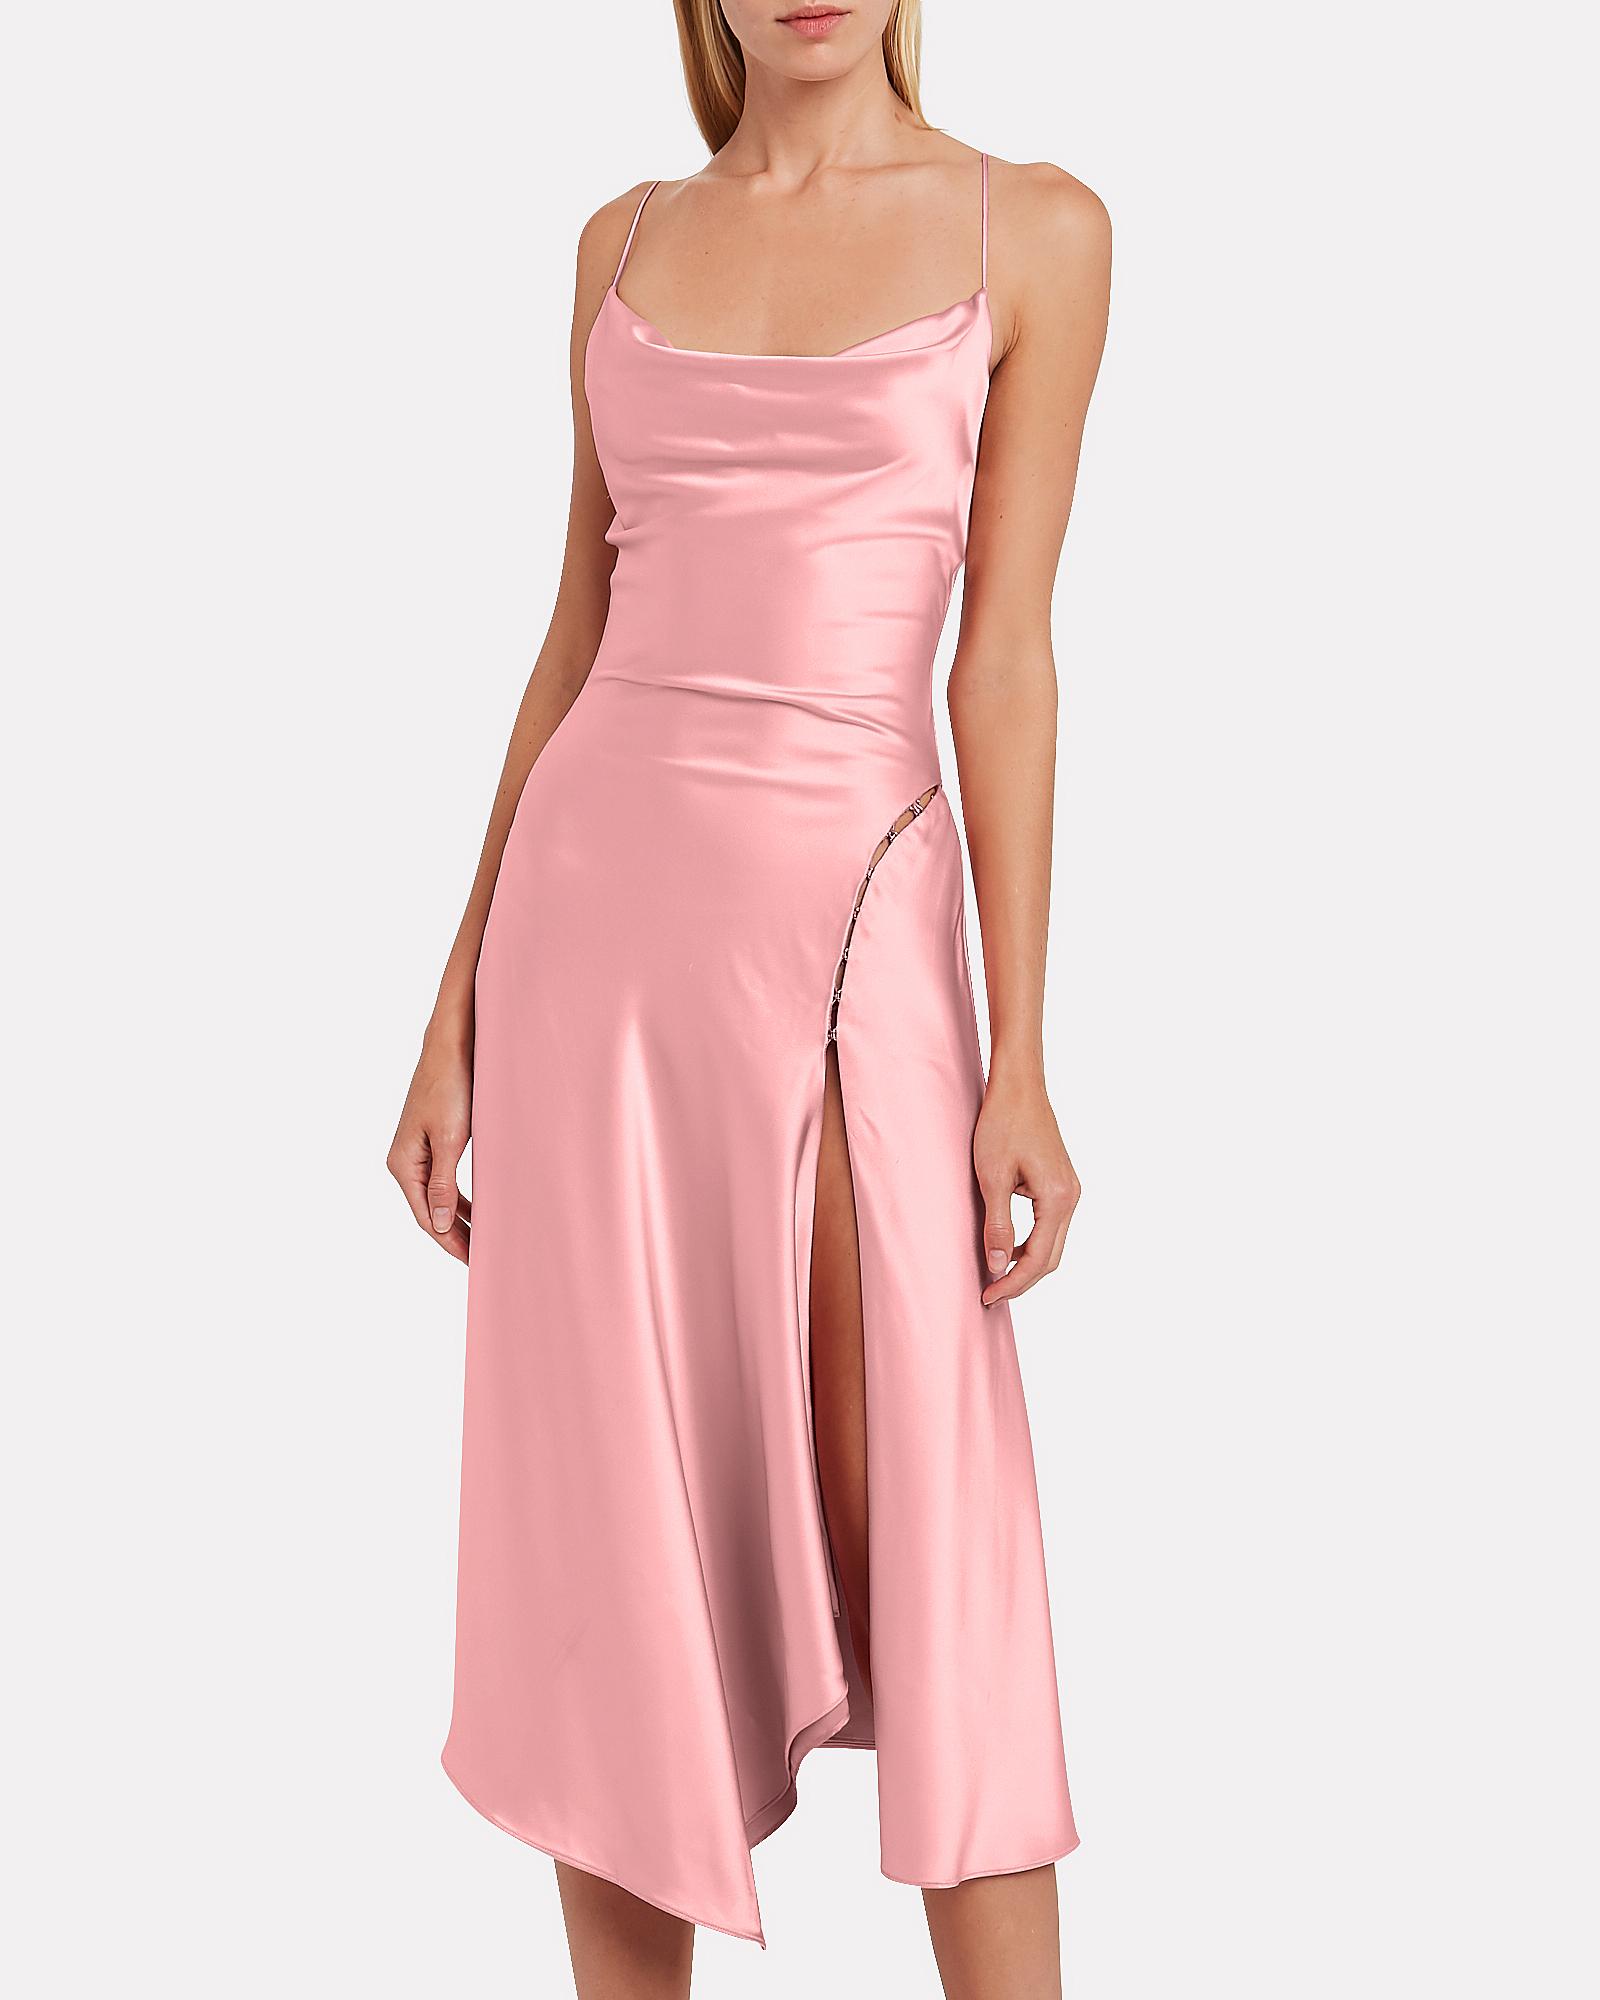 Jonathan Simkhai Satin Cowl Neck Slip Dress in Blush (Pink) - Lyst